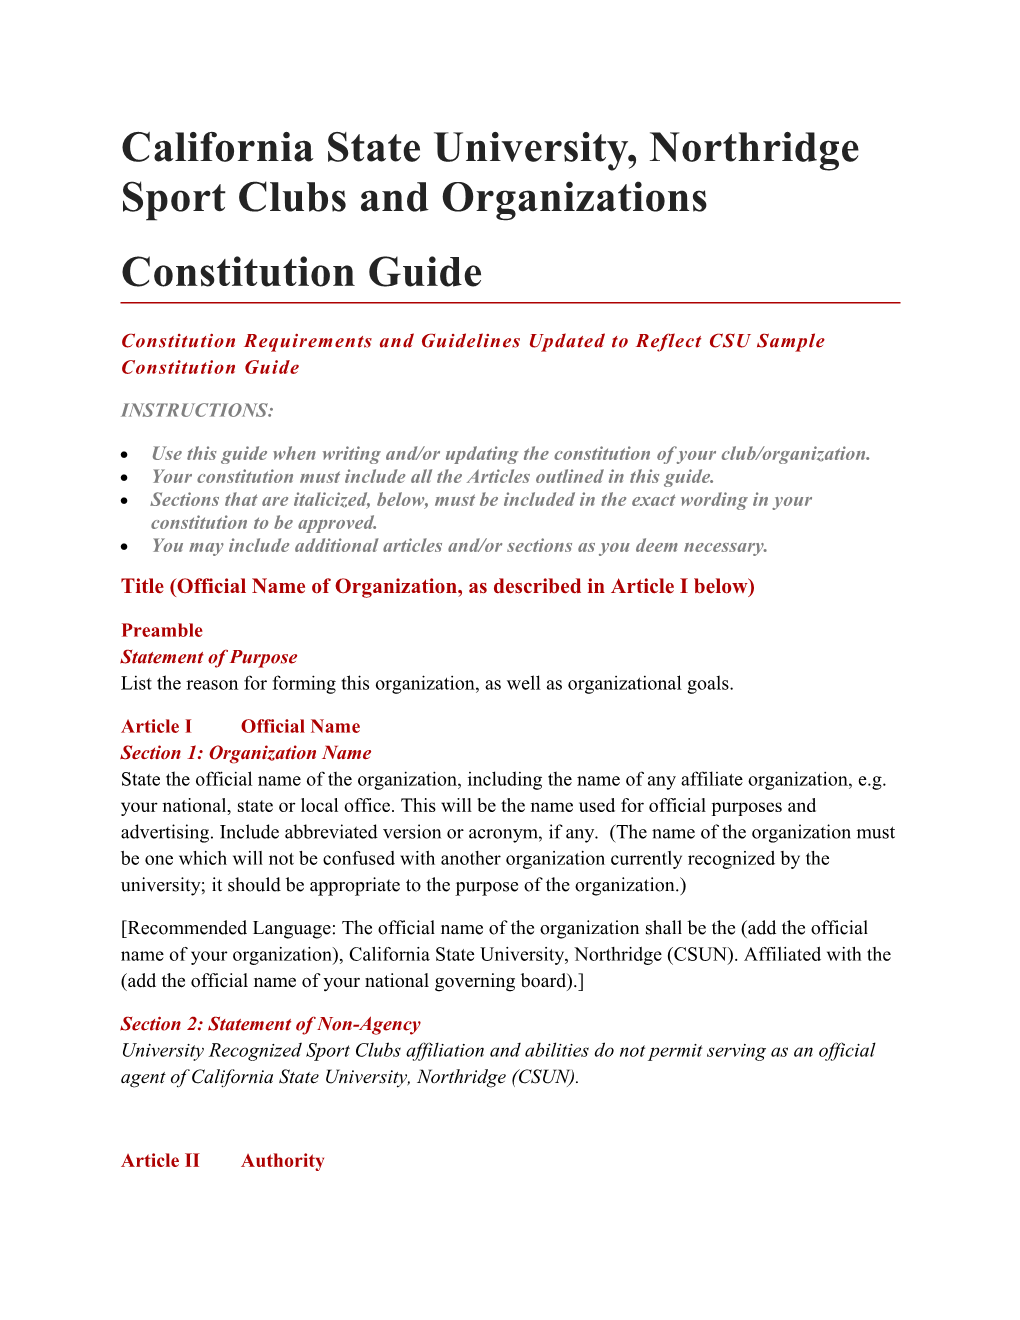 California State University, Northridge Sport Clubs and Organizations